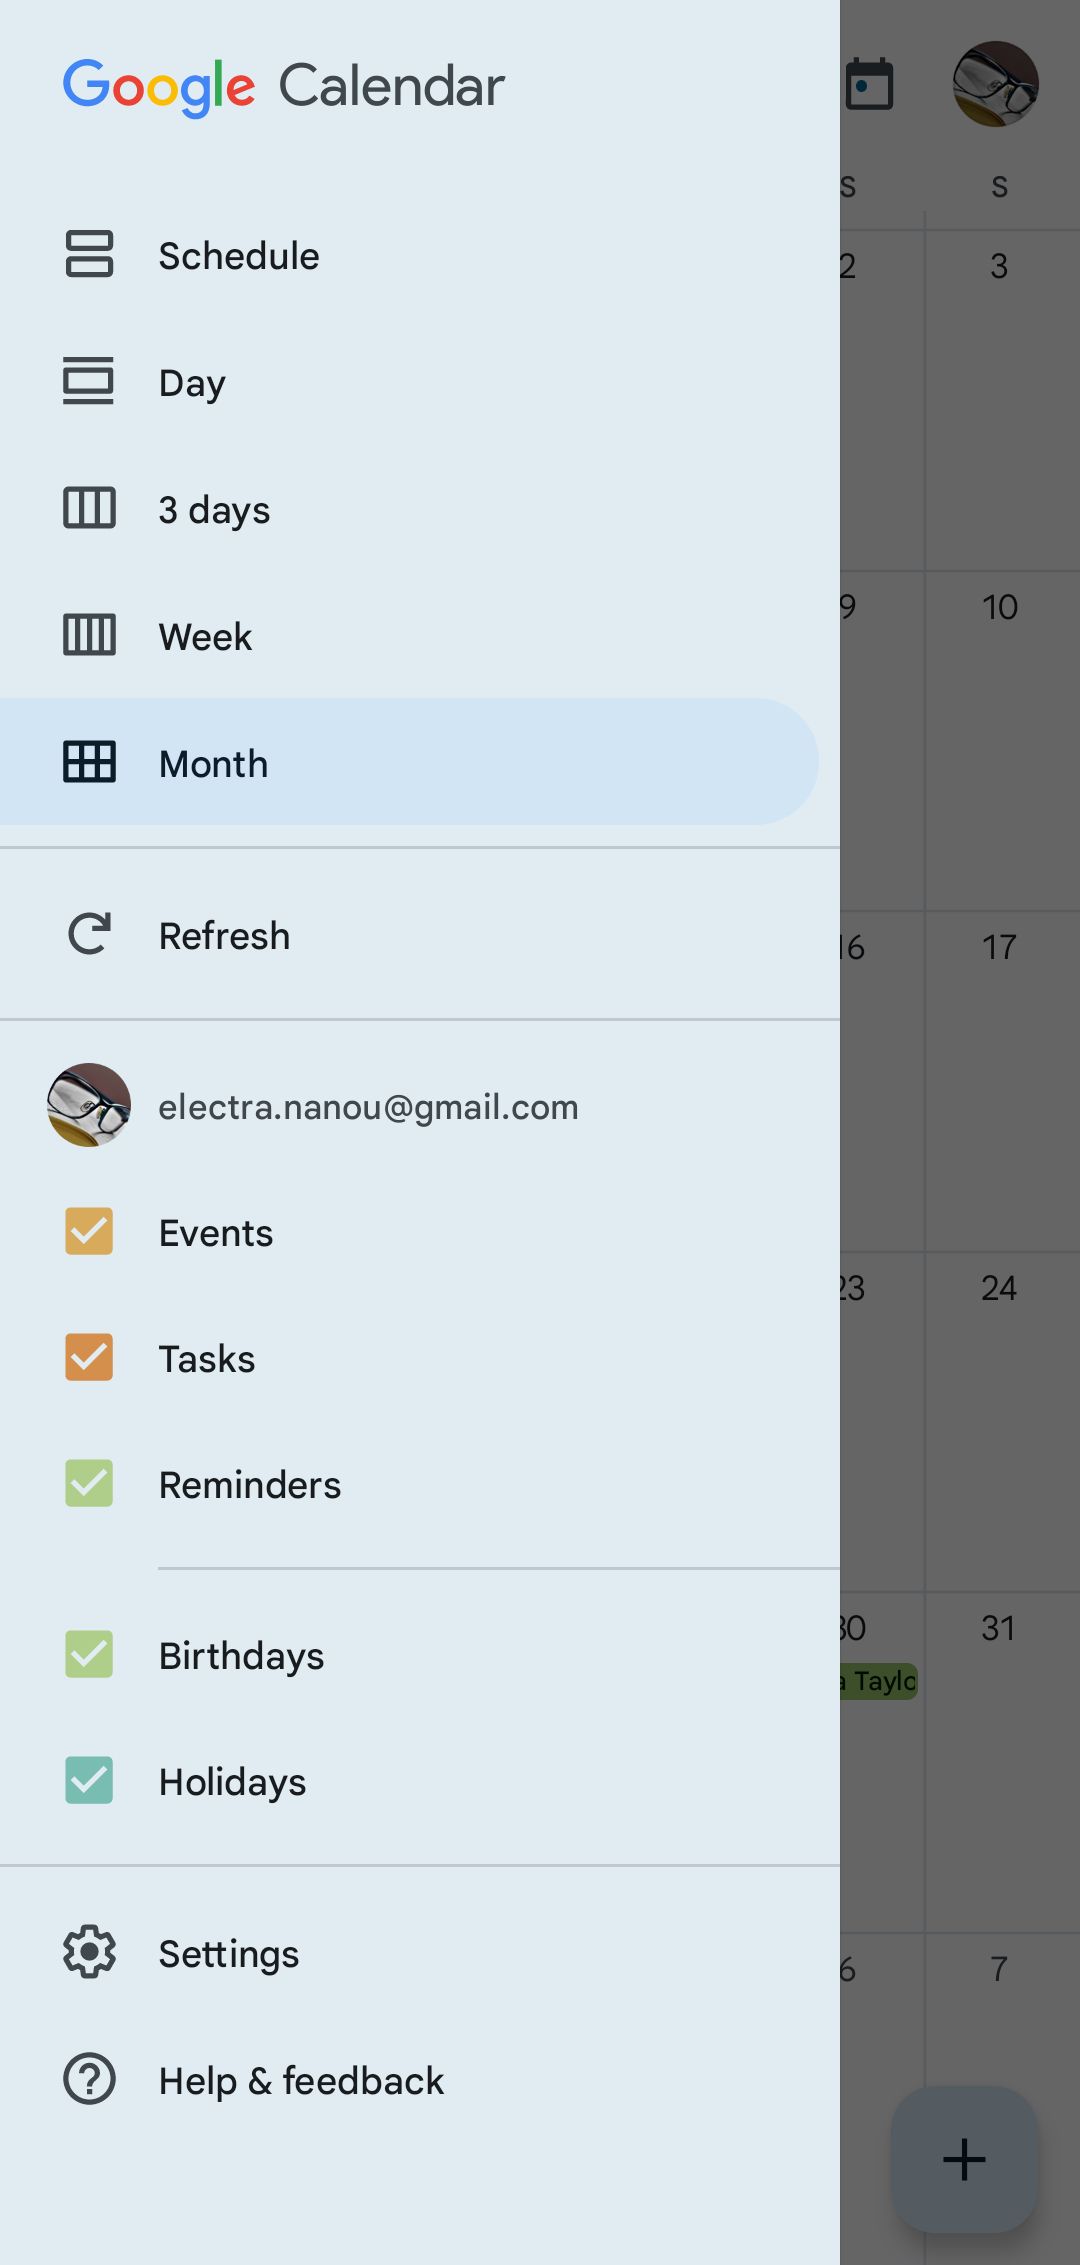 Google Calendar Menu on Android